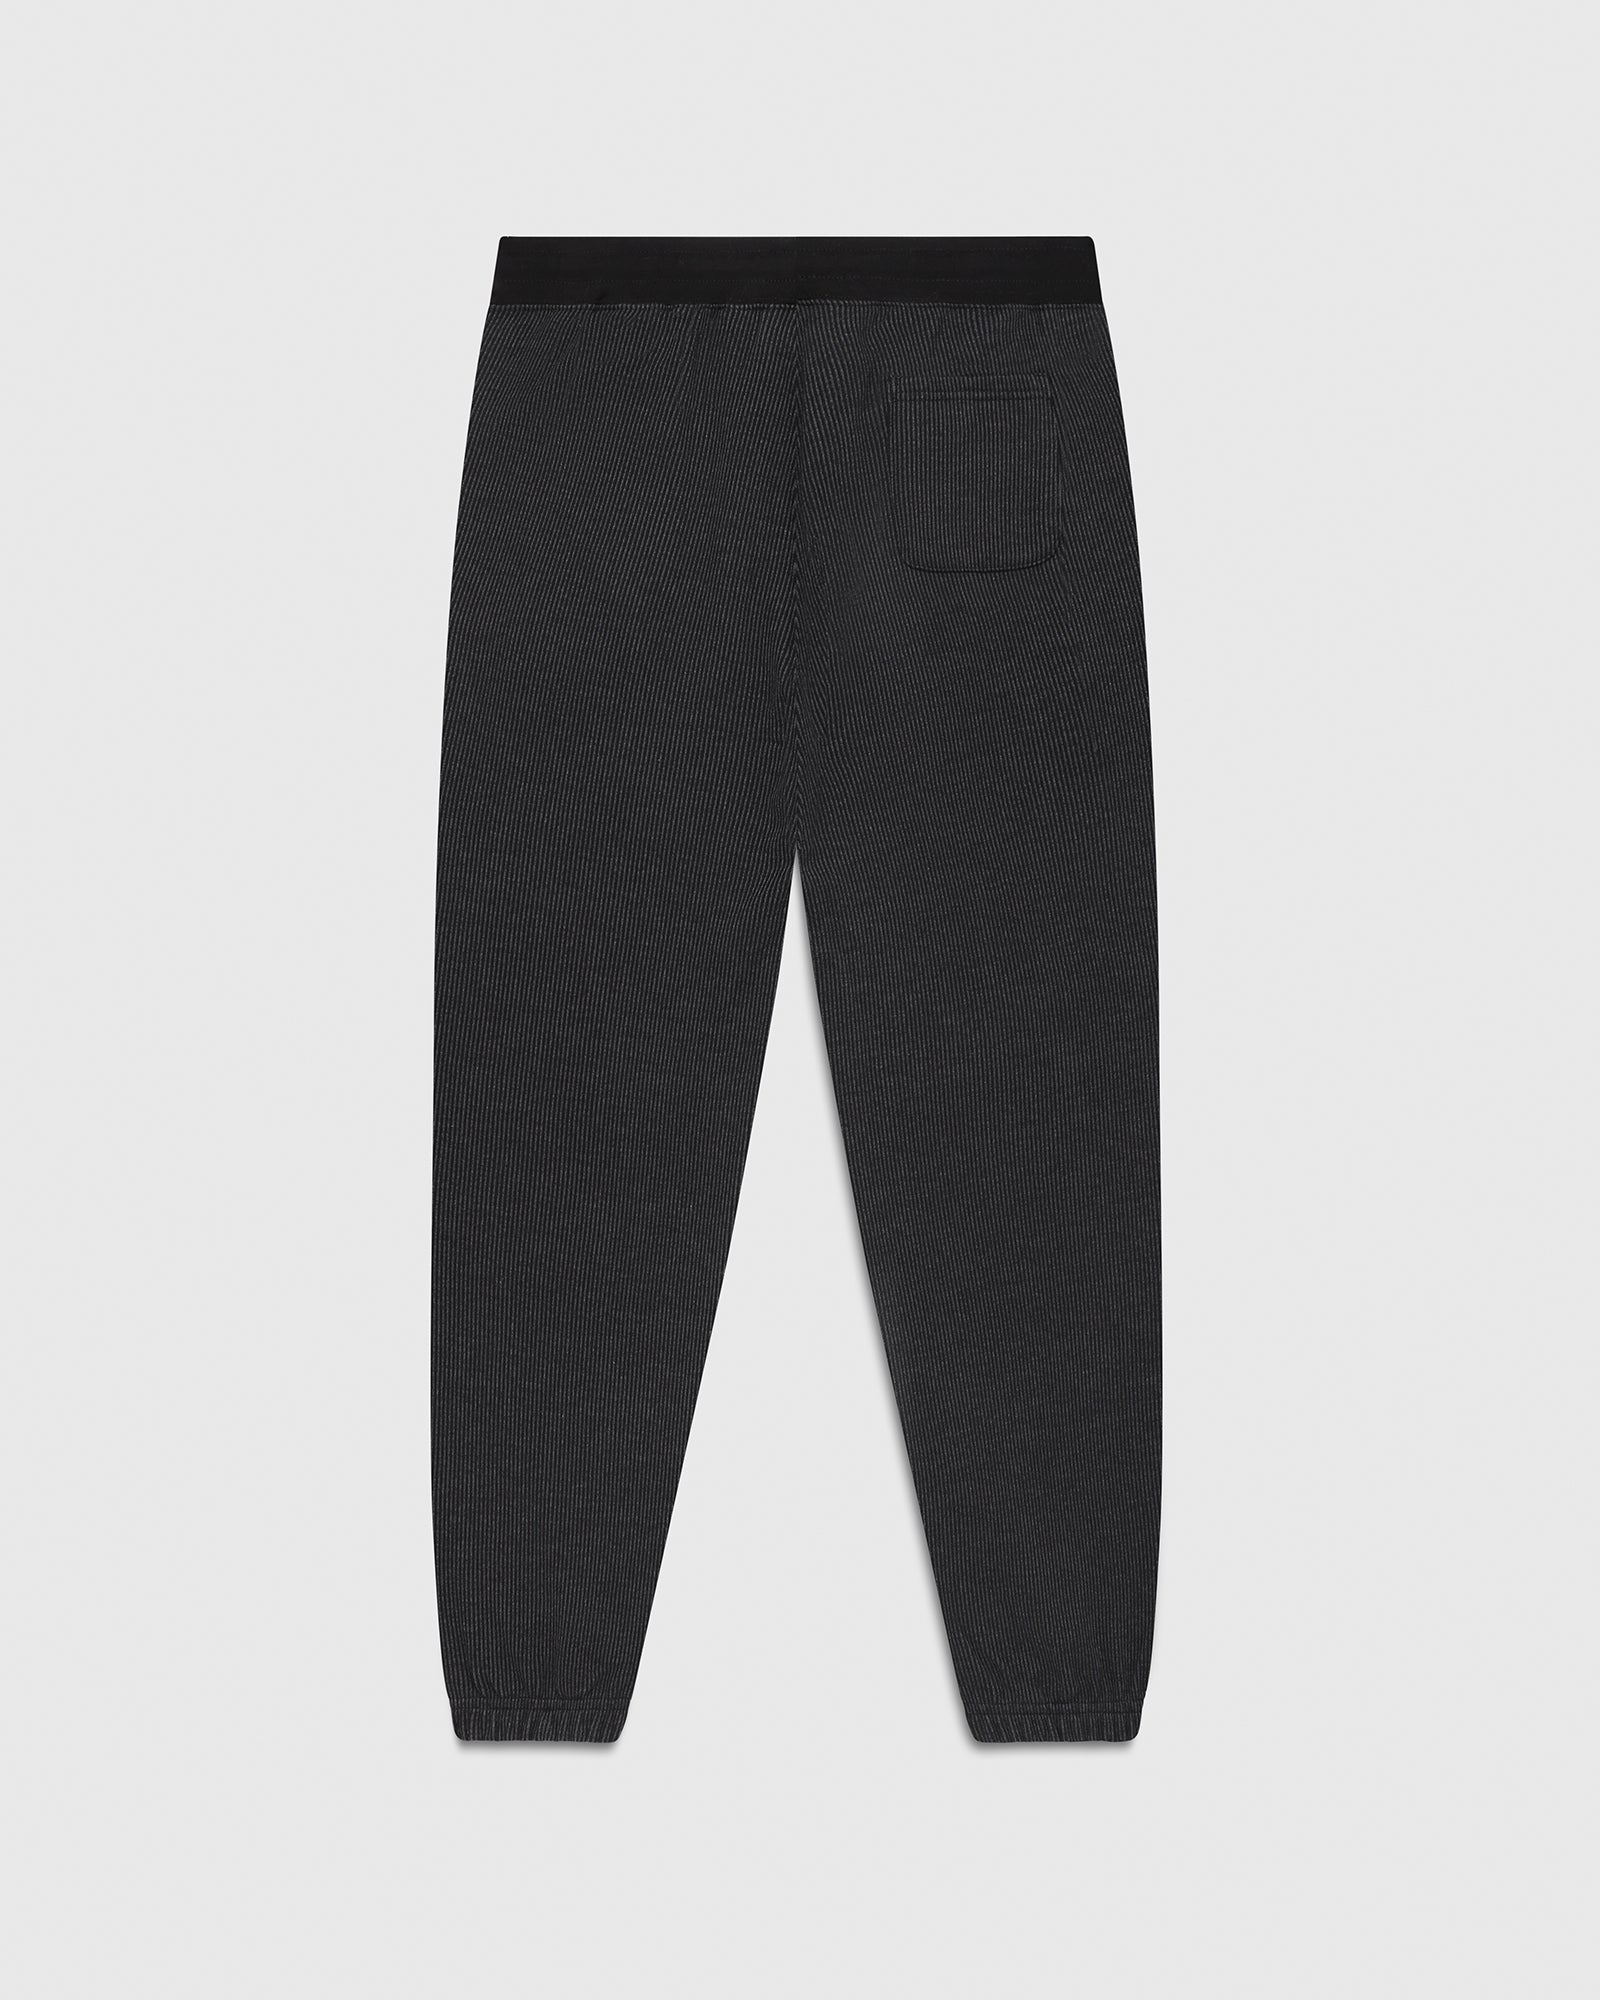 Seersucker Fleece Relaxed Fit Sweatpant - Black/Charcoal IMAGE #4